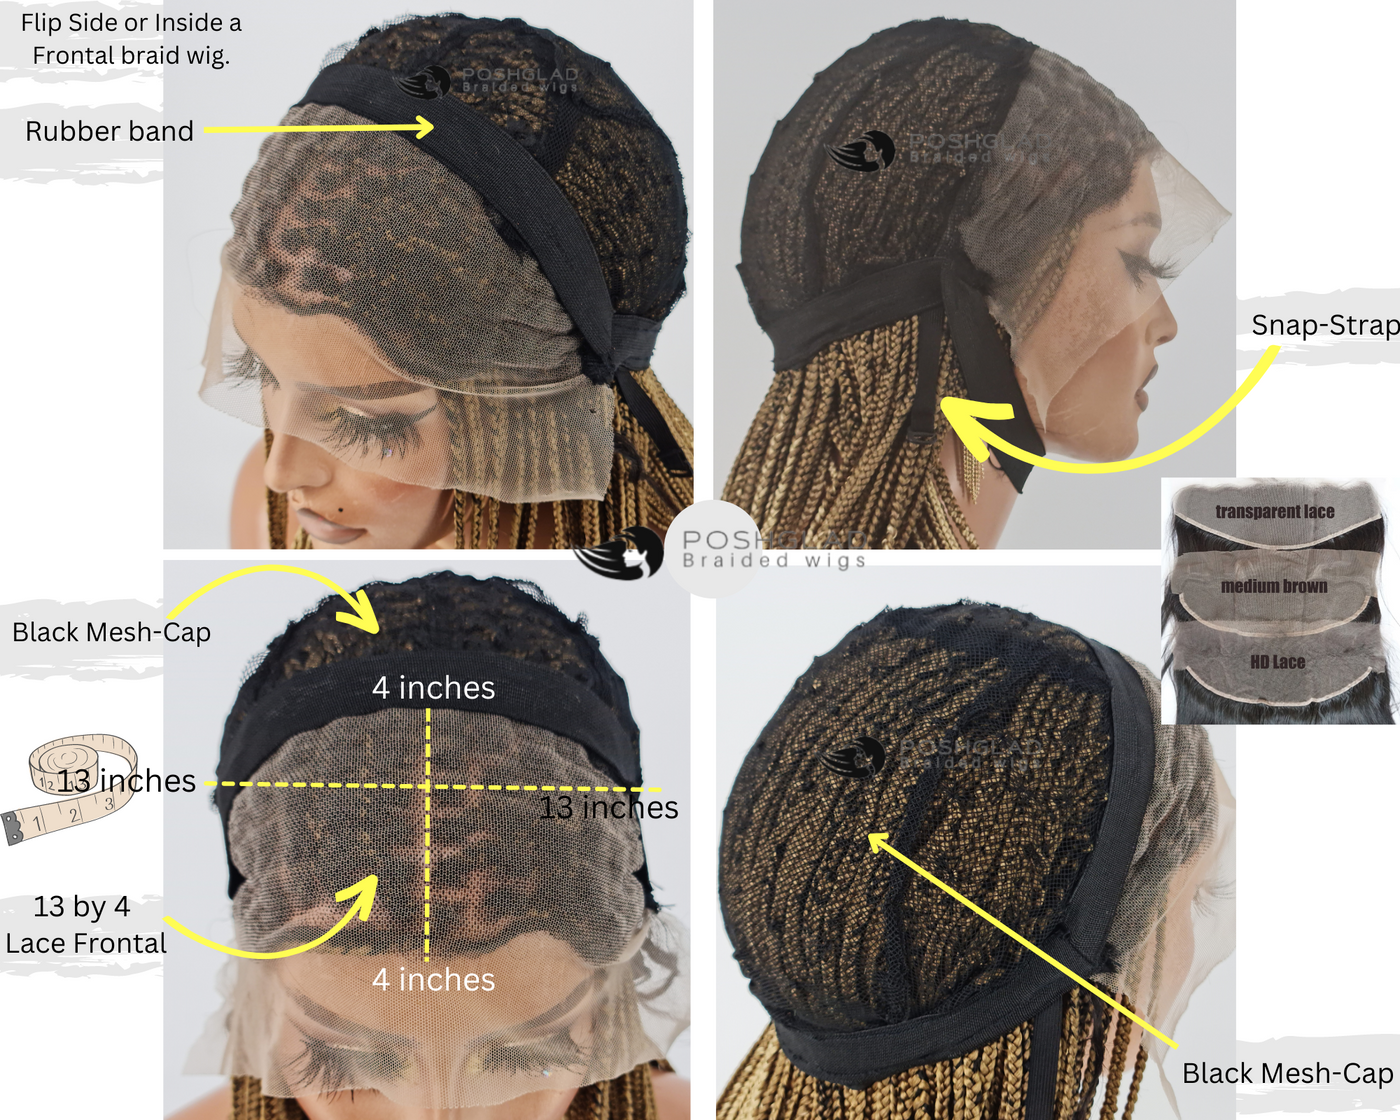 Cornrow Braid Wig "13x4 Lace Frontal" - Bemi Poshglad Braided Wigs Cornrow Braid Wig